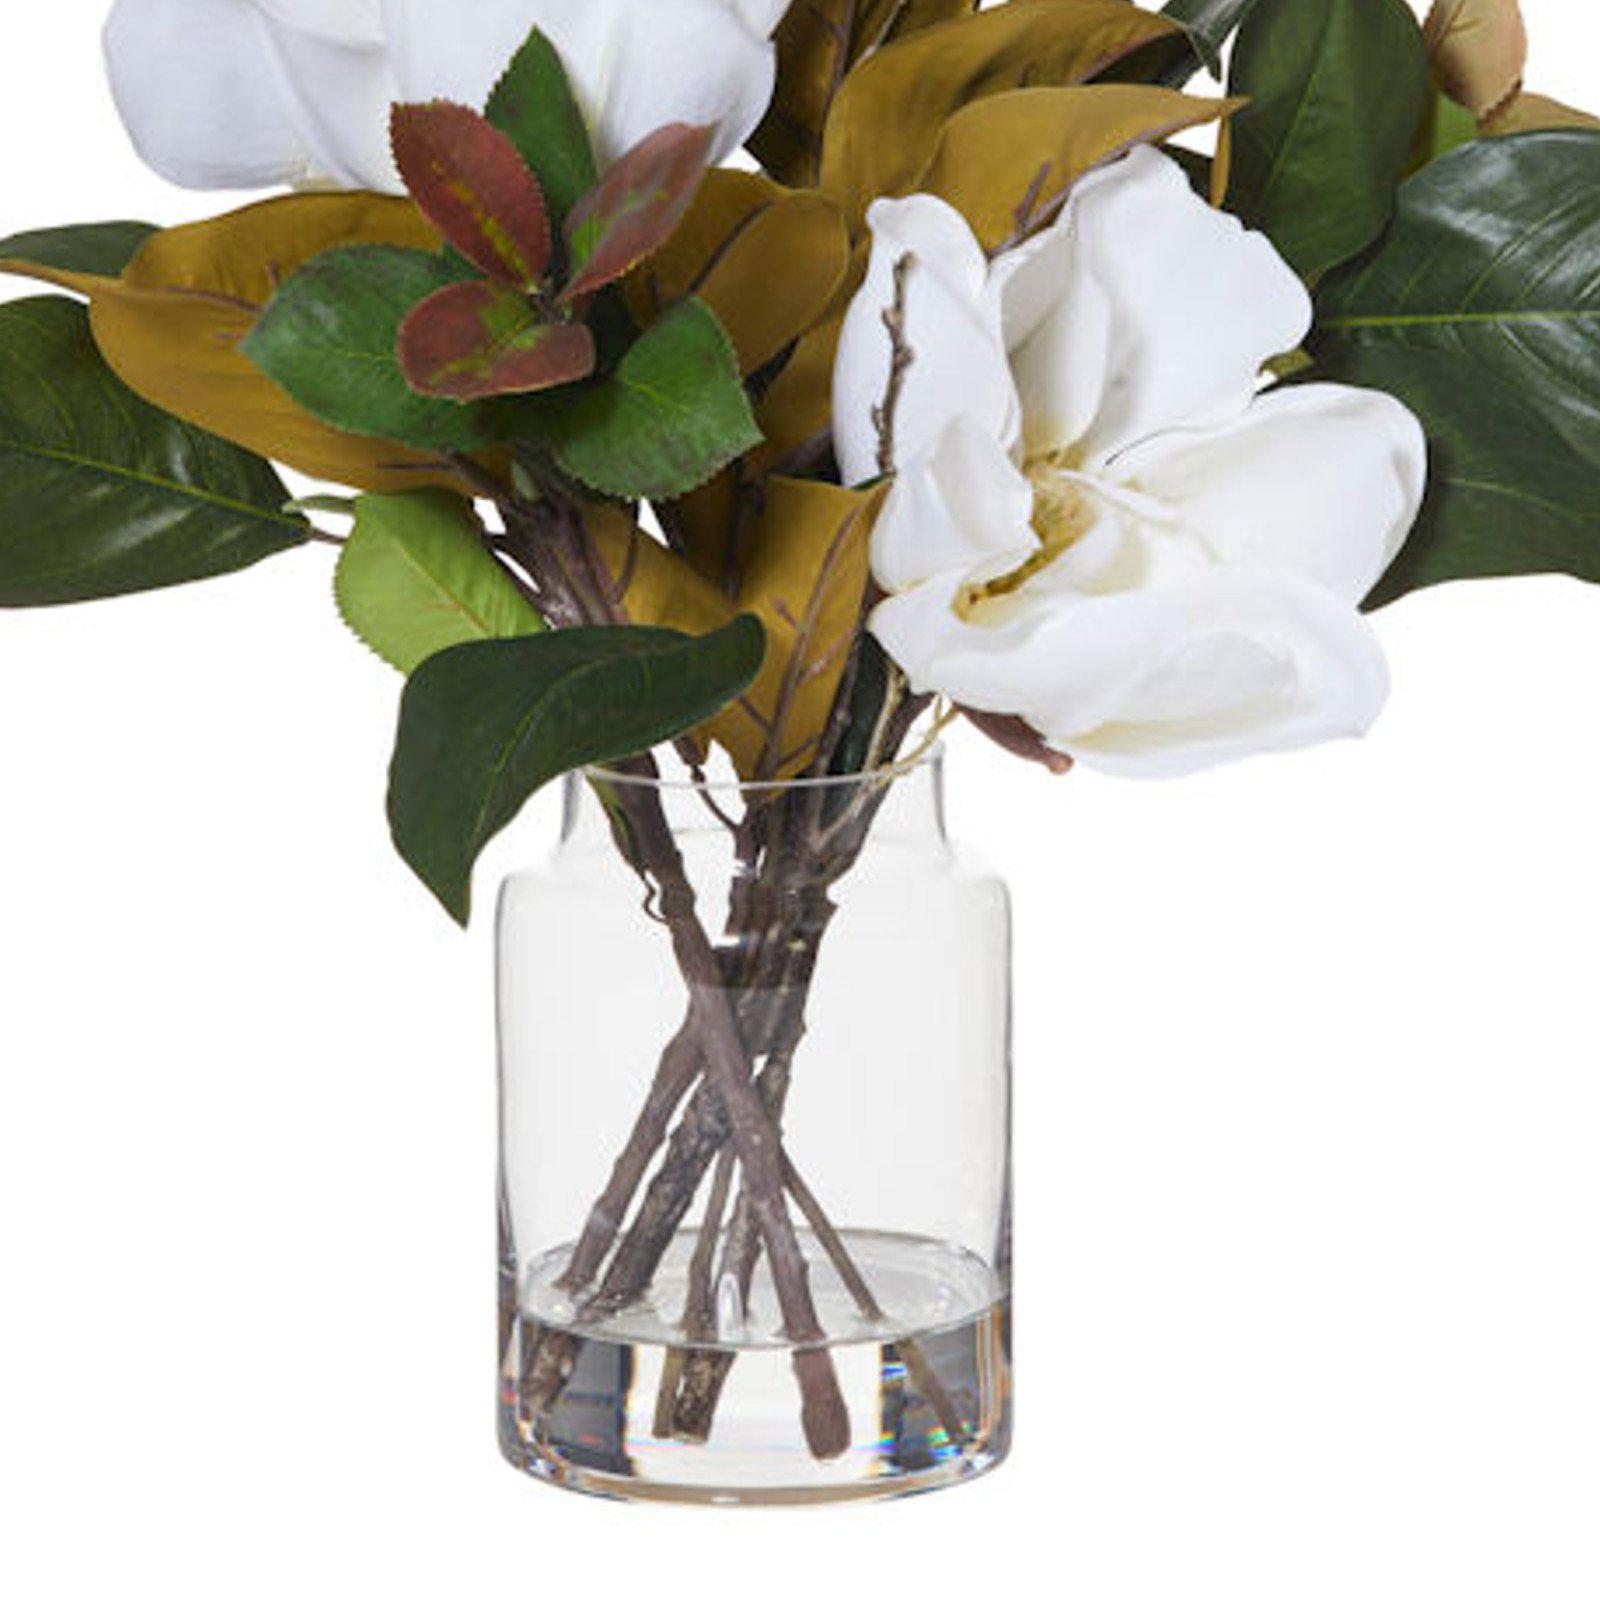 Magnolia Mix With Pail Vase- Artificial Flower / Floral Arrangement-artificial flowers and plants-Chef's Quality Cookware